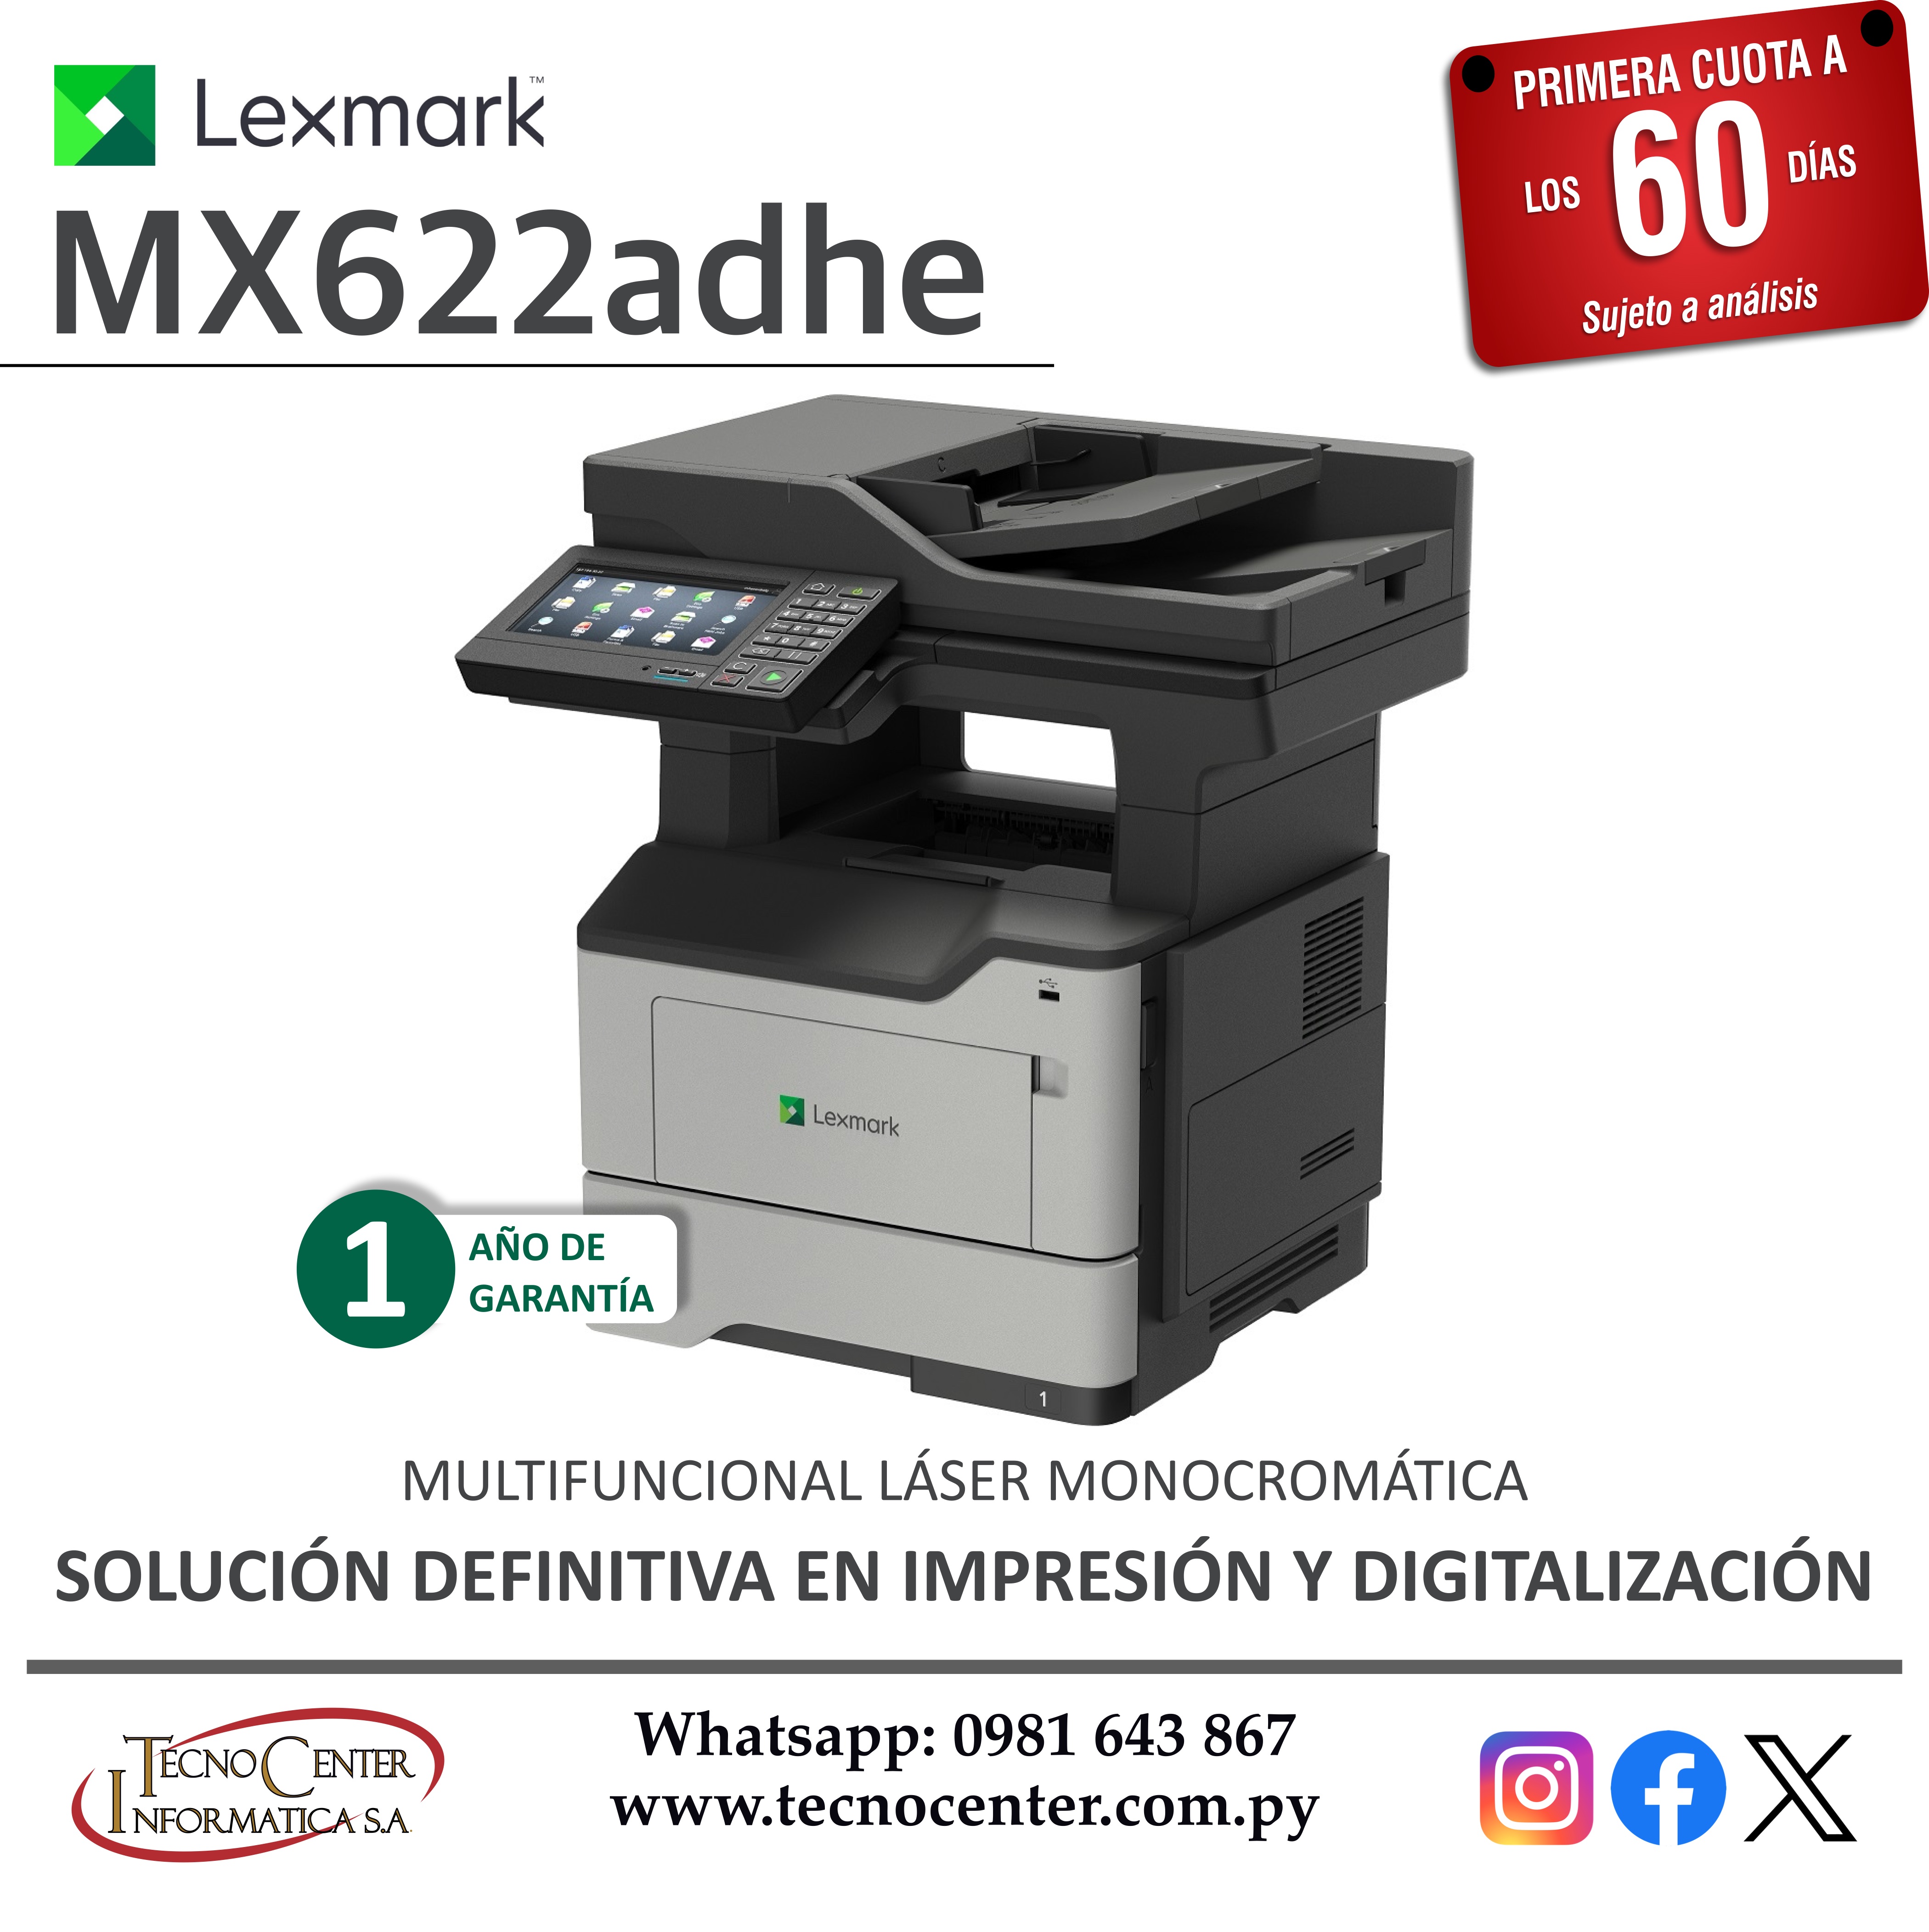 Multifuncional Monocromática Lexmark MX622adhe